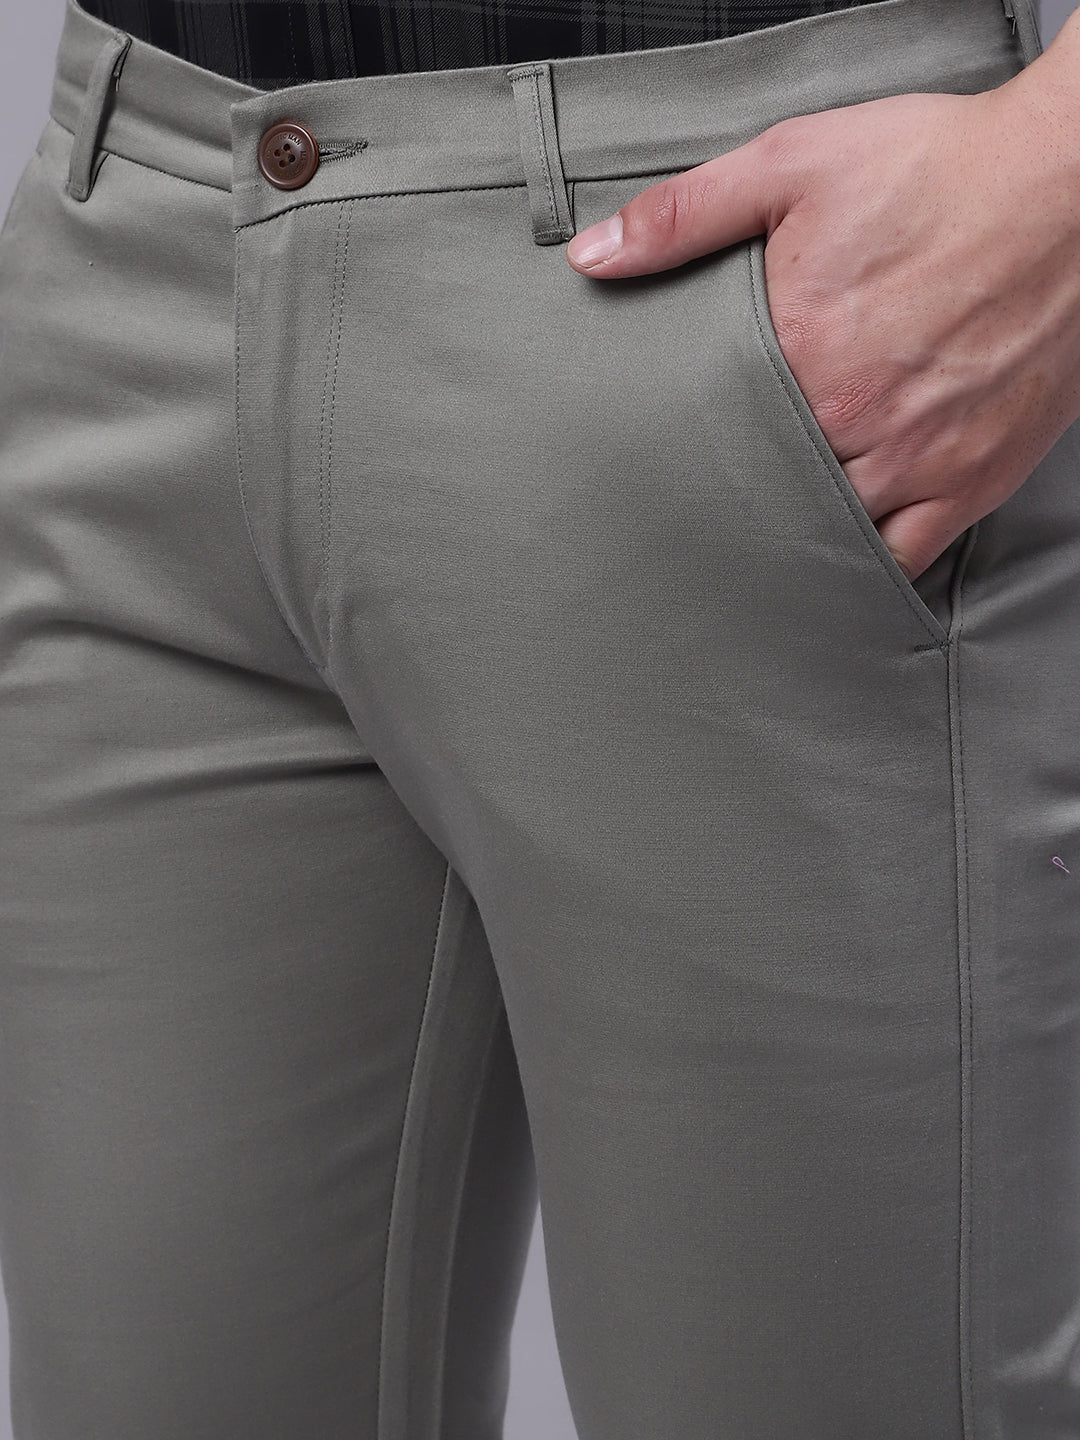 Effortless Elegance Classic Fit Pants - Dusty Green